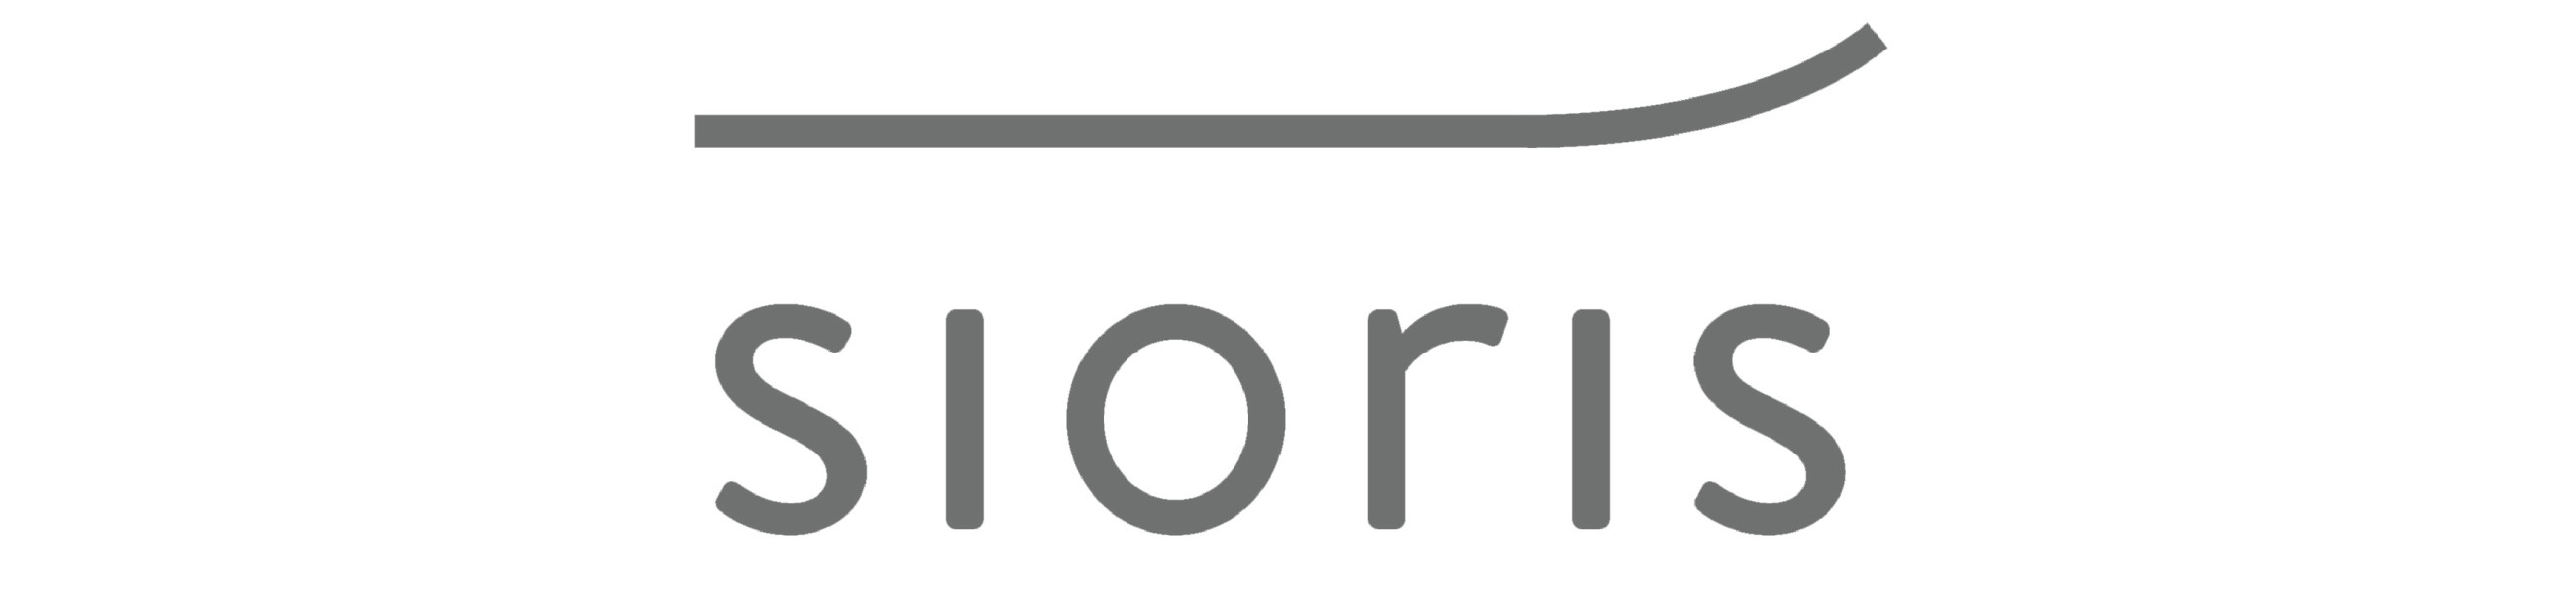 Sioris logo